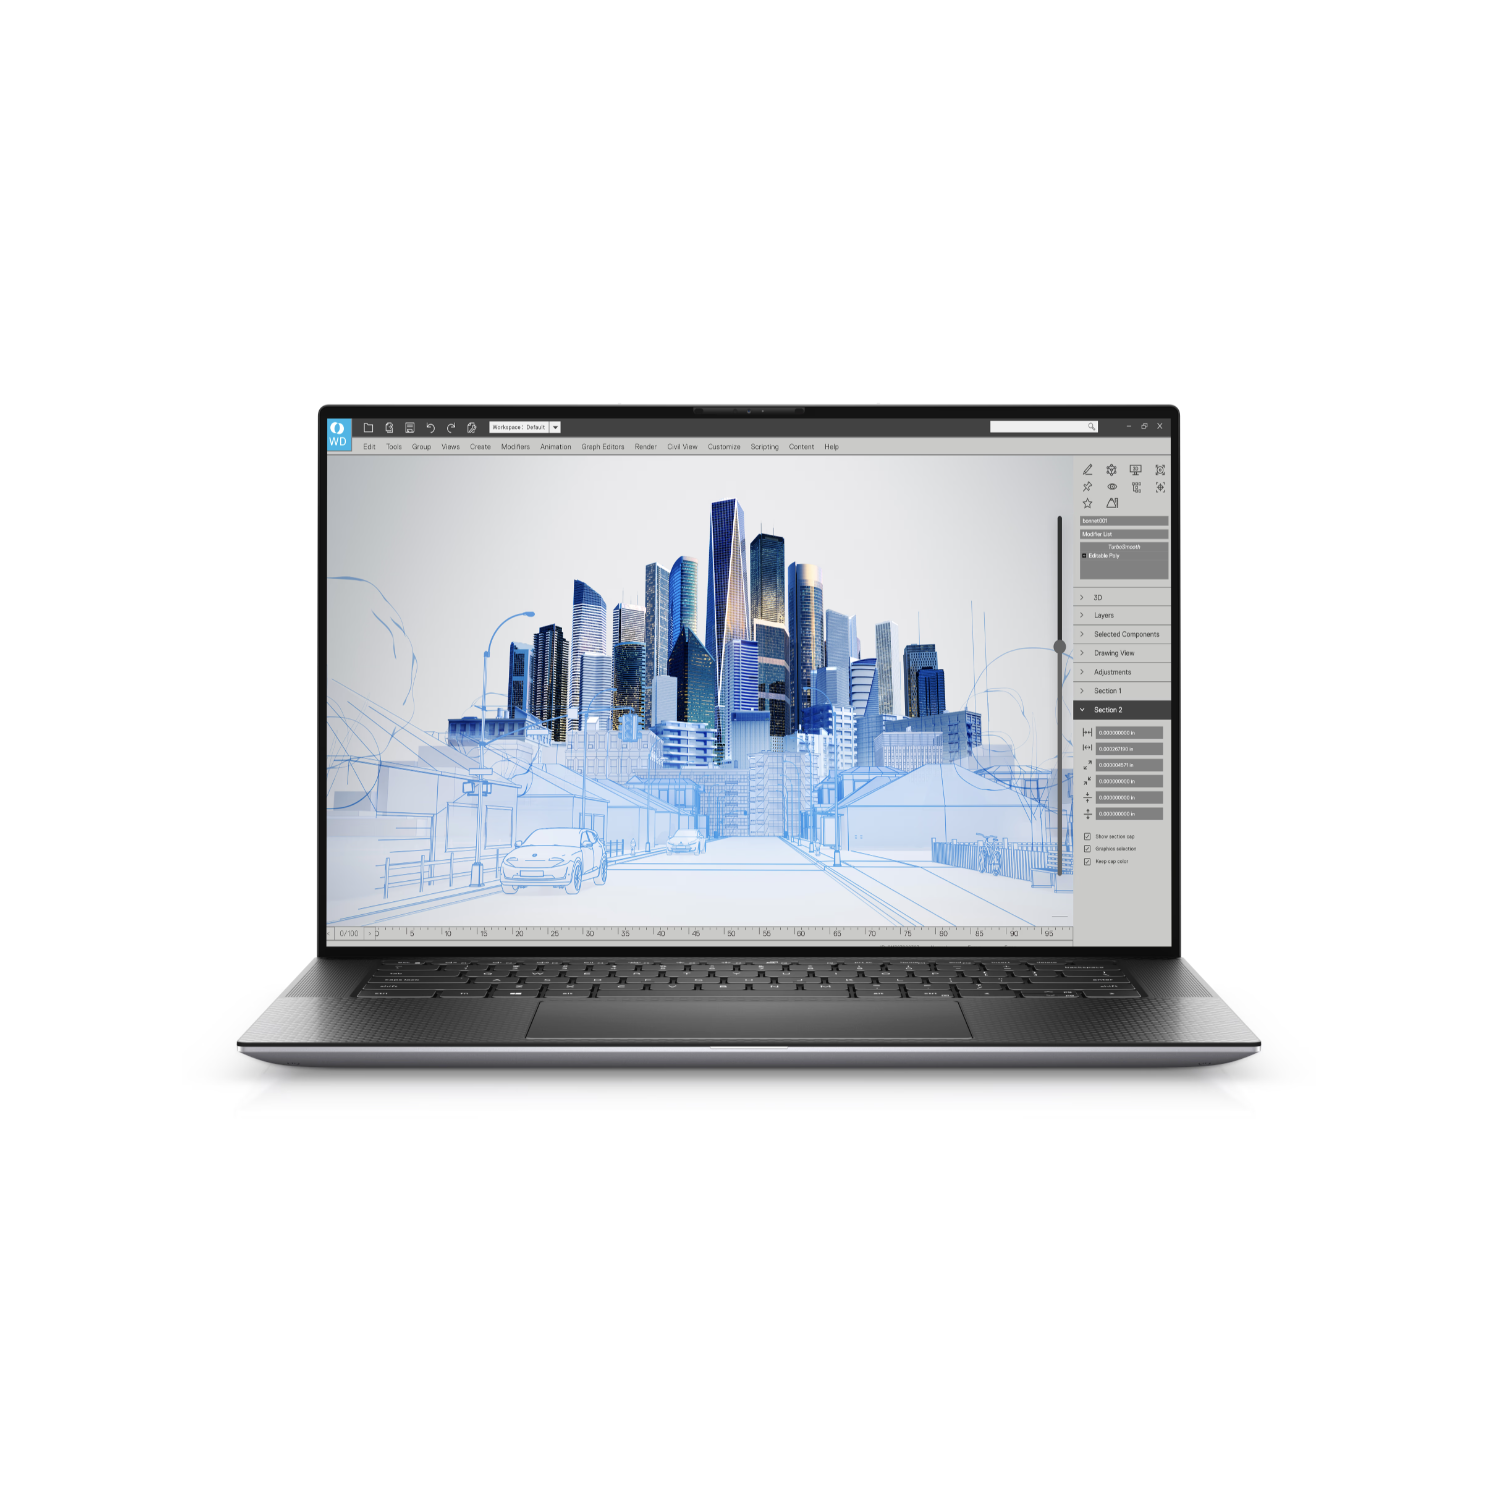 Refurbished (Good) - Dell Precision 5560 AI Mobile Workstation Laptop FHD+ 60Hz Intel i7-11850H 2.5Ghz, 8 Core, 16GB RAM, 512GB SSD, NVIDIA RTX A2000 4GB, Windows 11 Pro